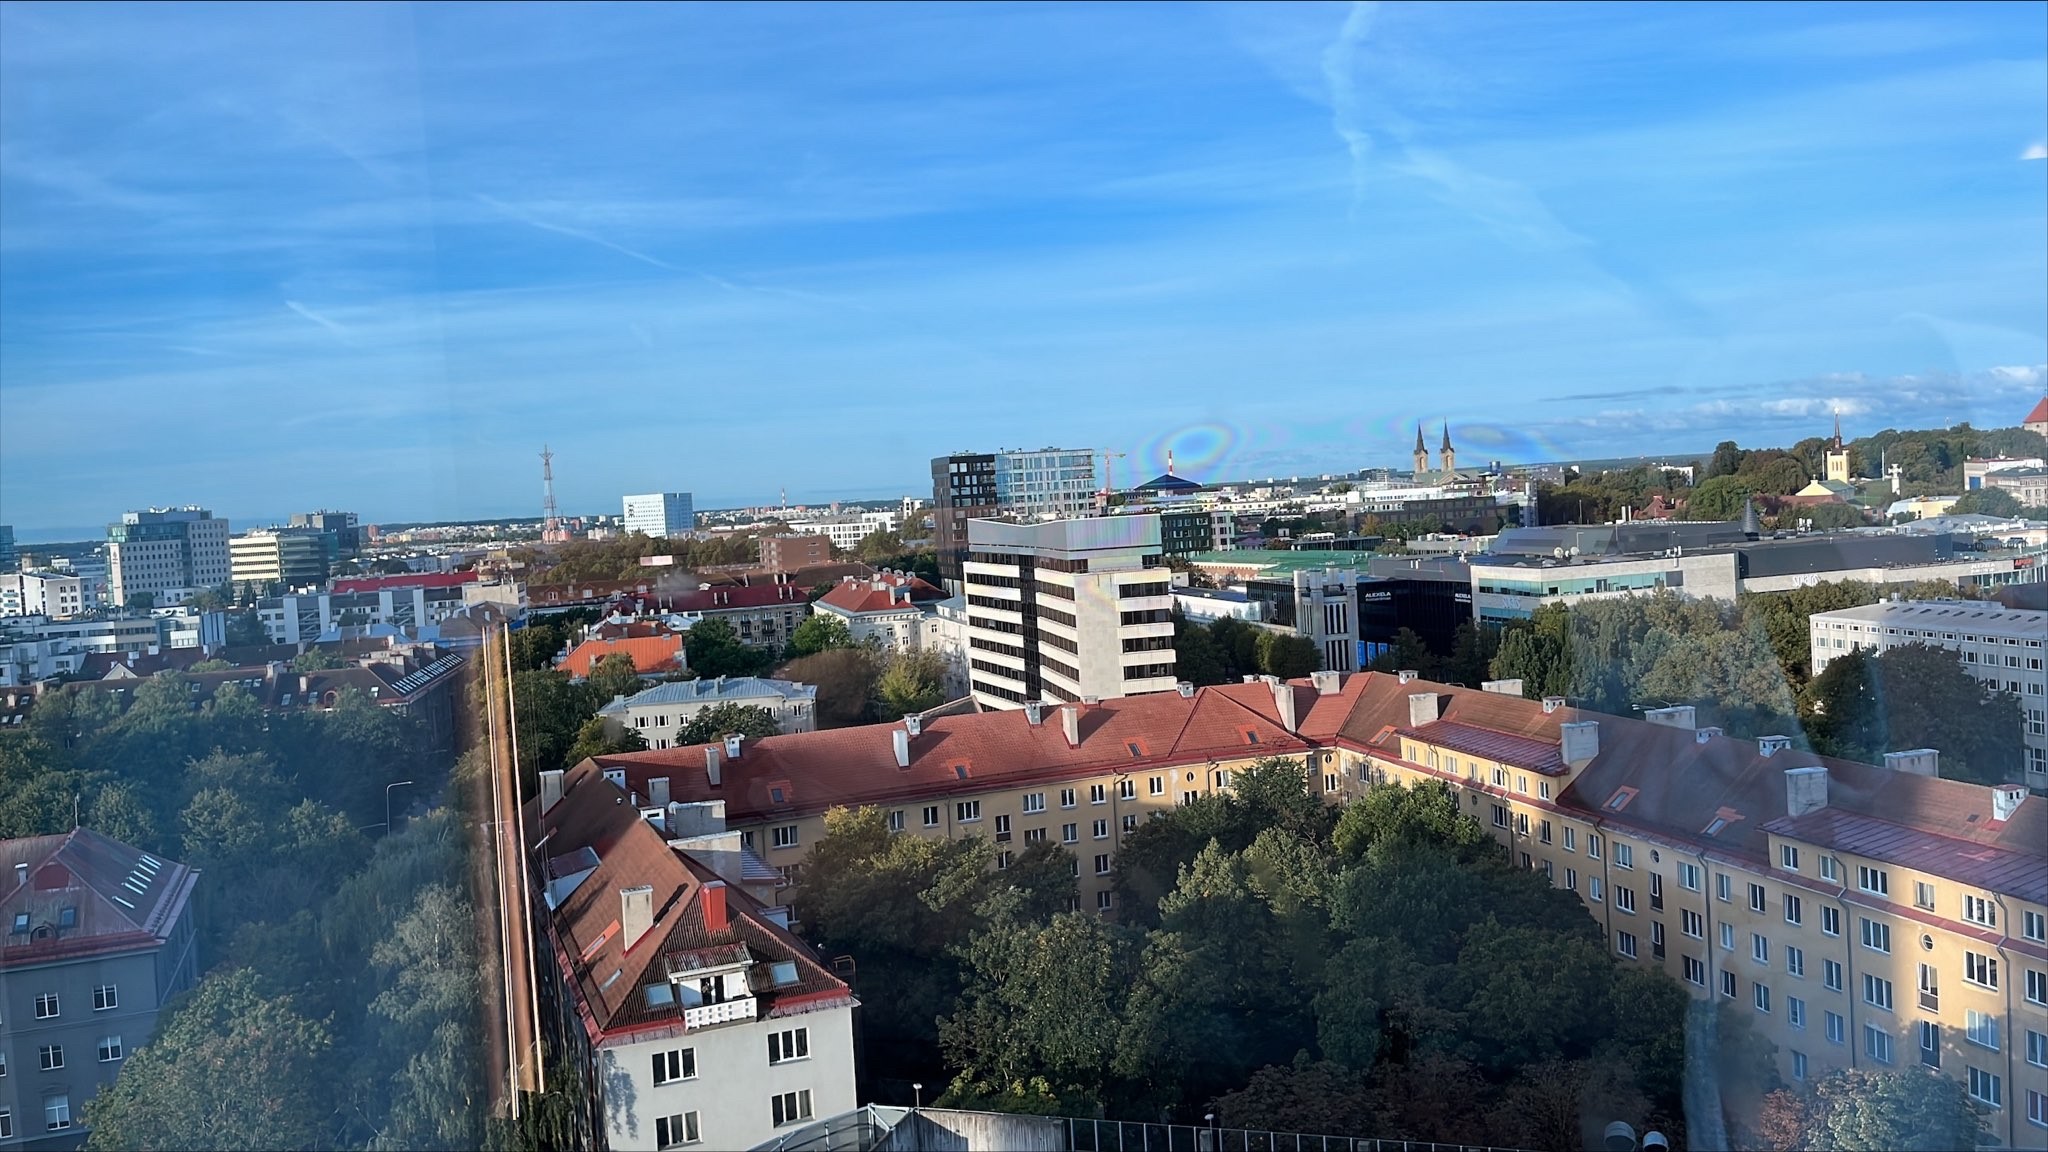 Why Tallinn, Estonia Became My Digital Oasis